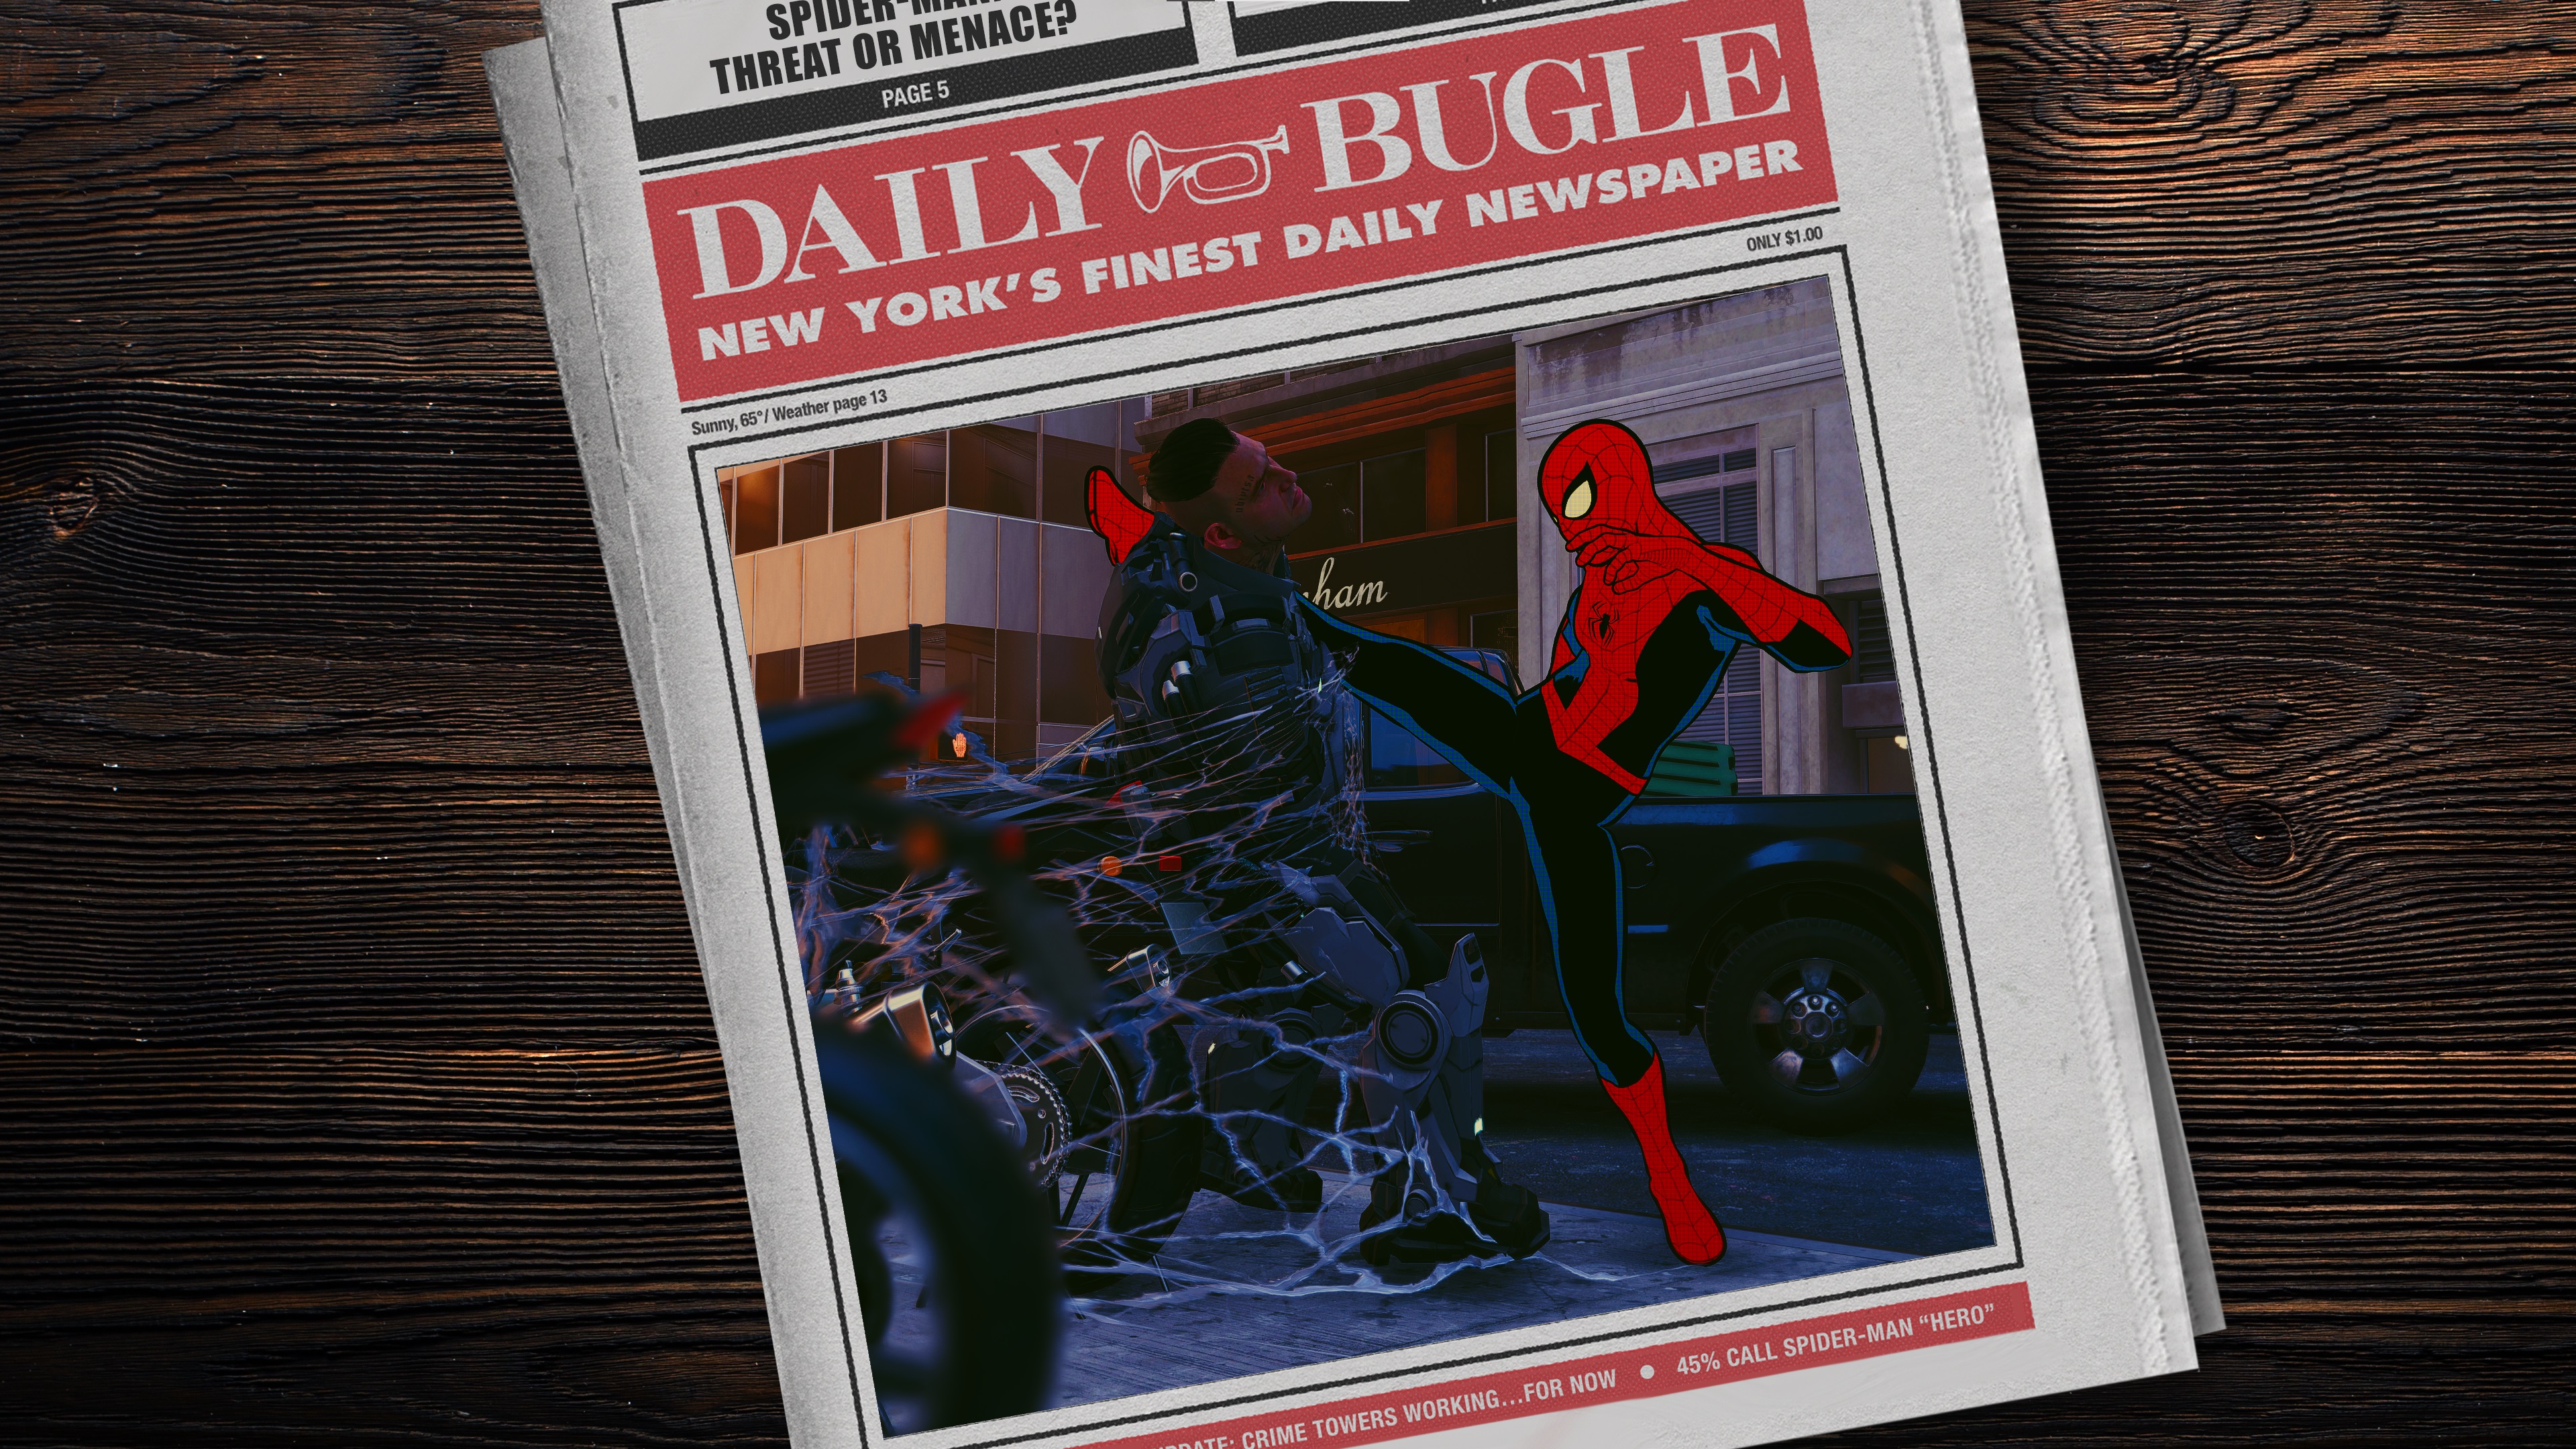 Spider Man Marvels Spider Man Superhero 3D CGi 3840x2160